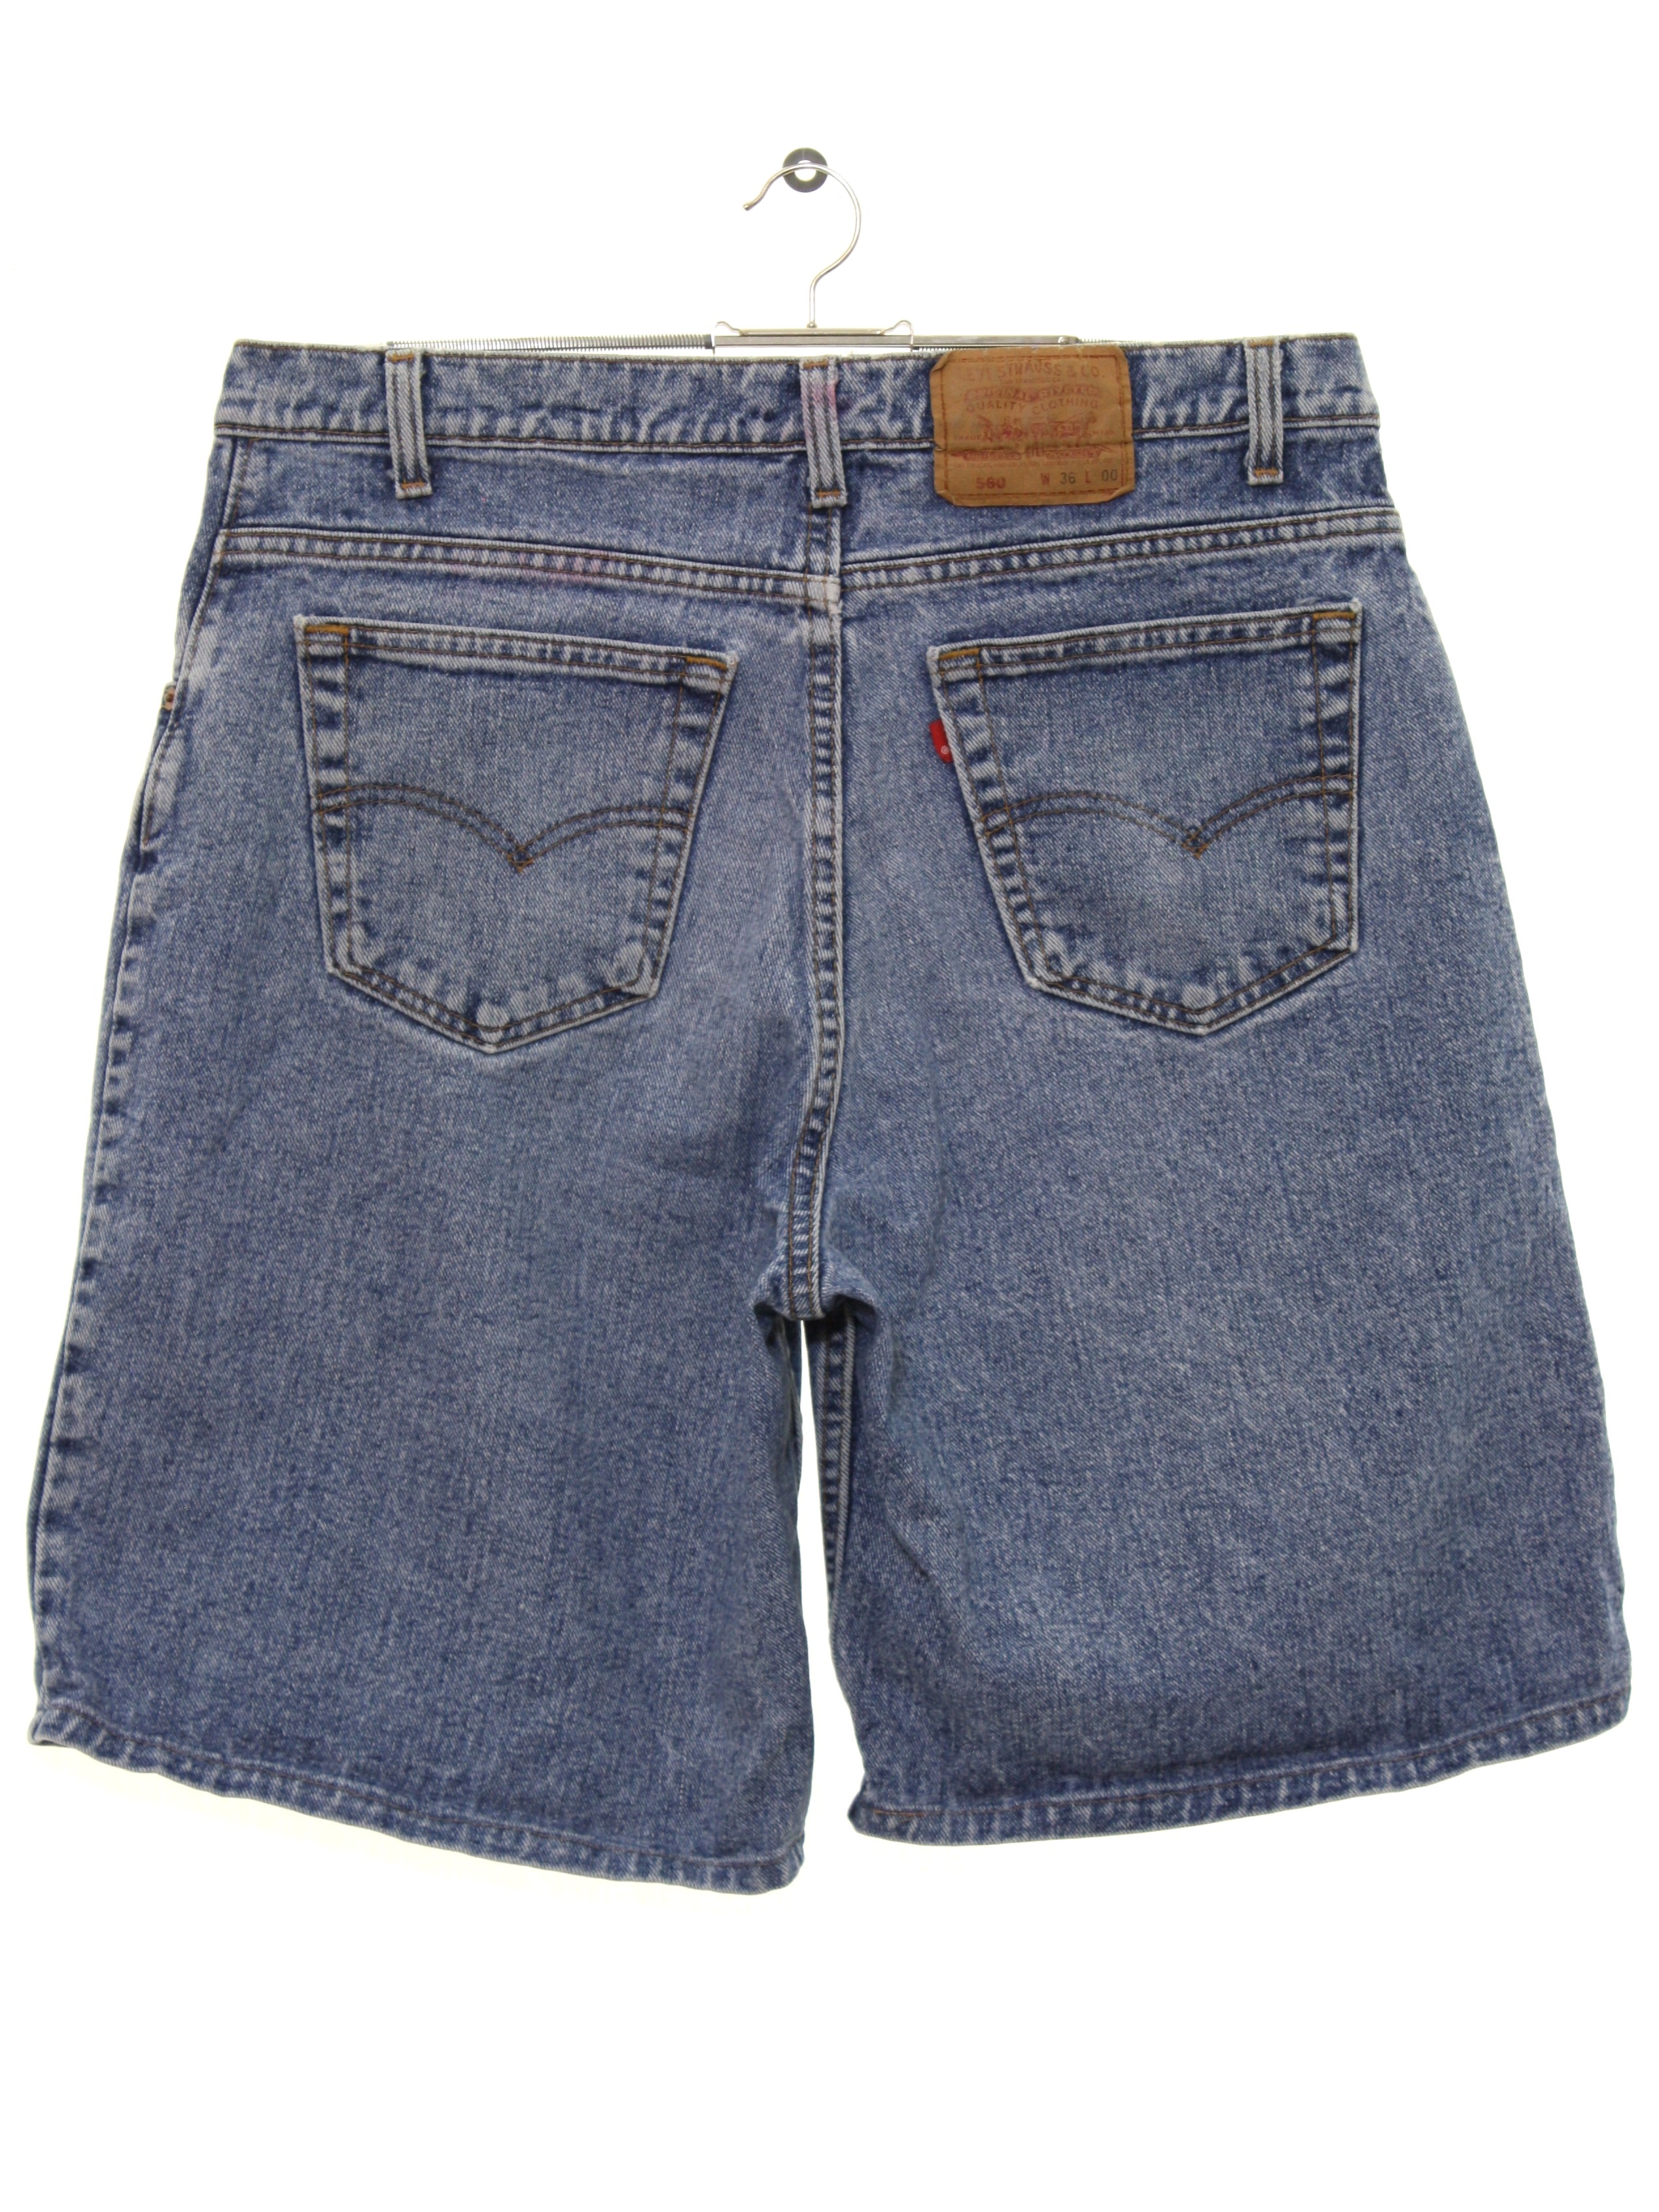 80s jean shorts mens